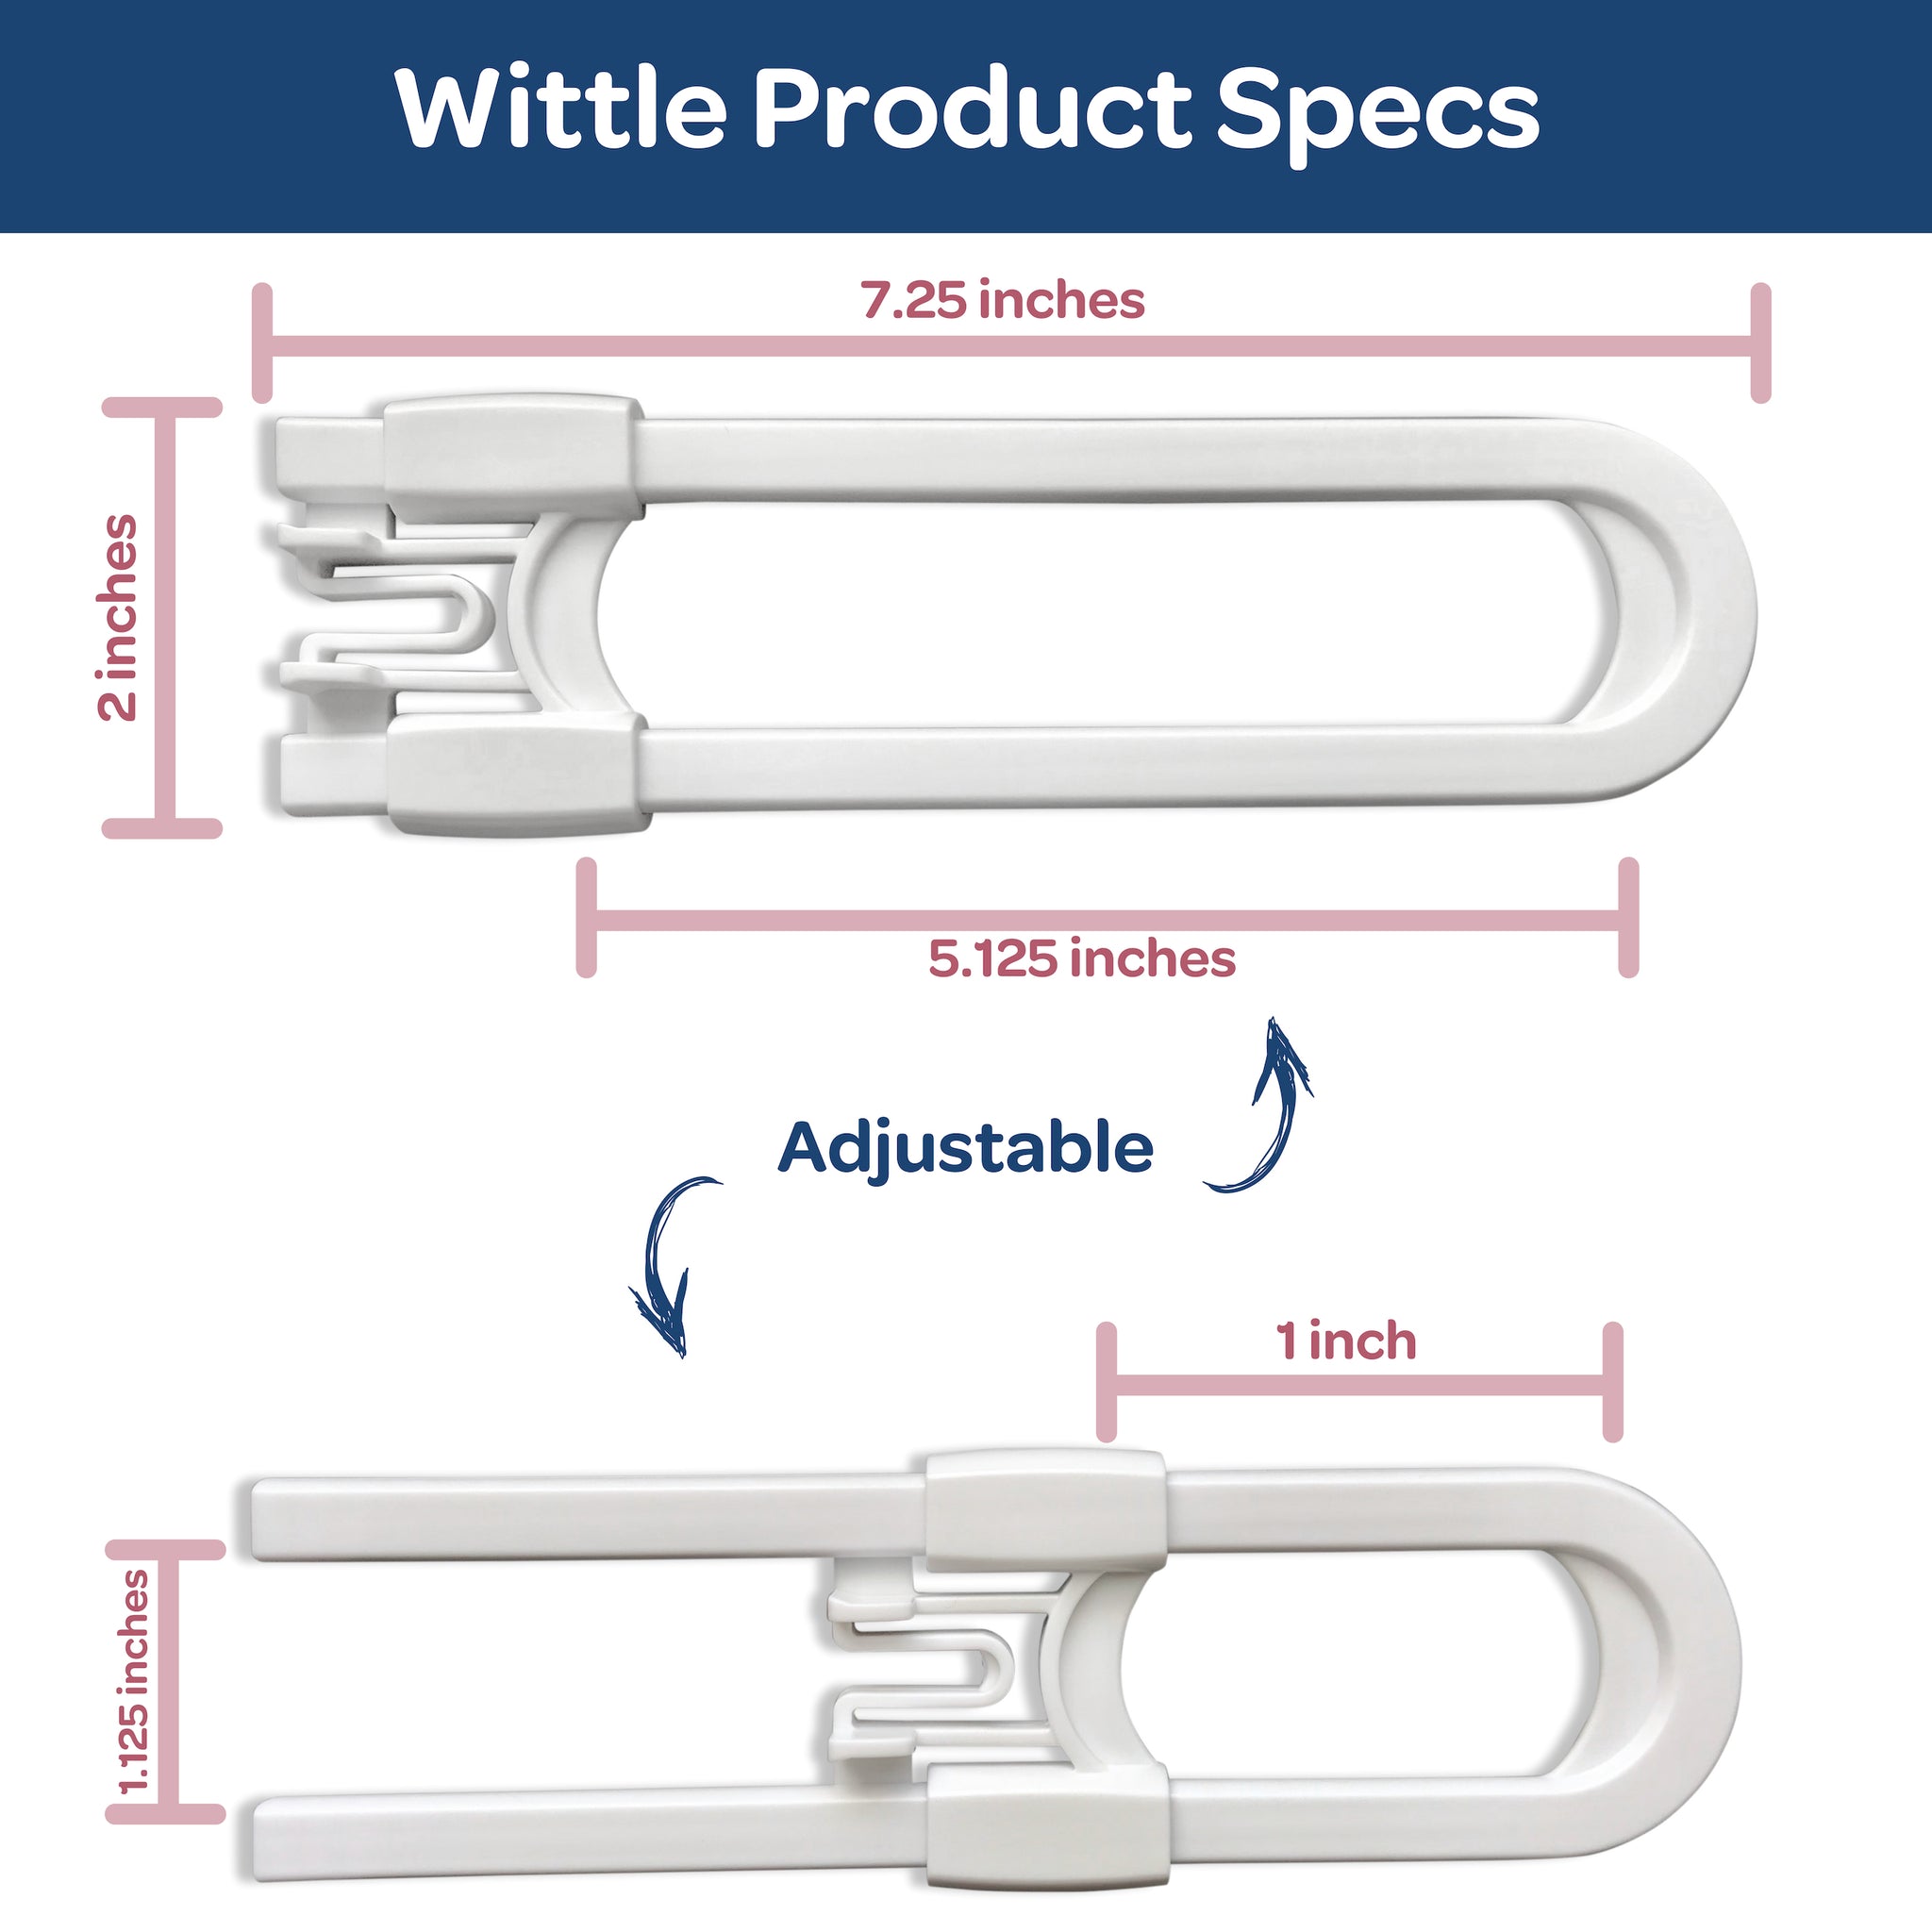 Wittle Sliding Child Safety Cabinet Locks (6 Pack)